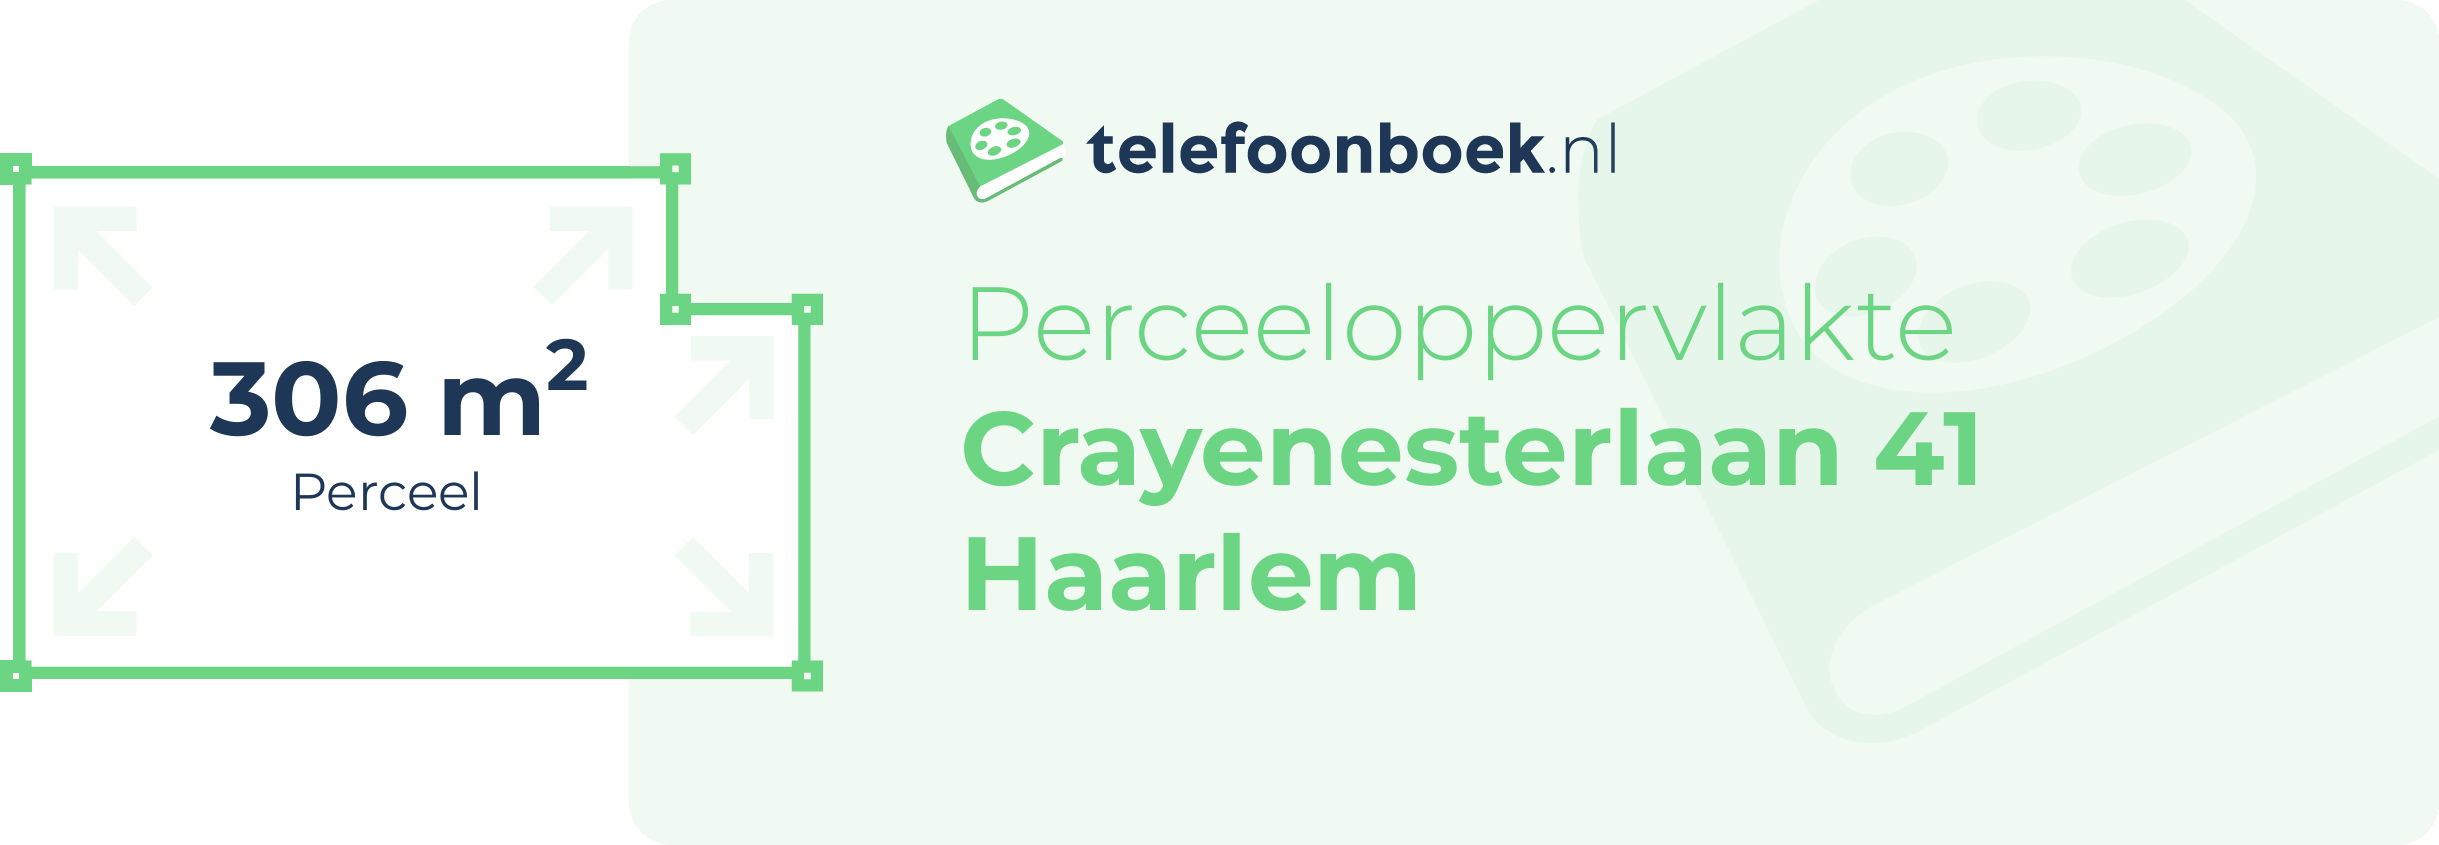 Perceeloppervlakte Crayenesterlaan 41 Haarlem